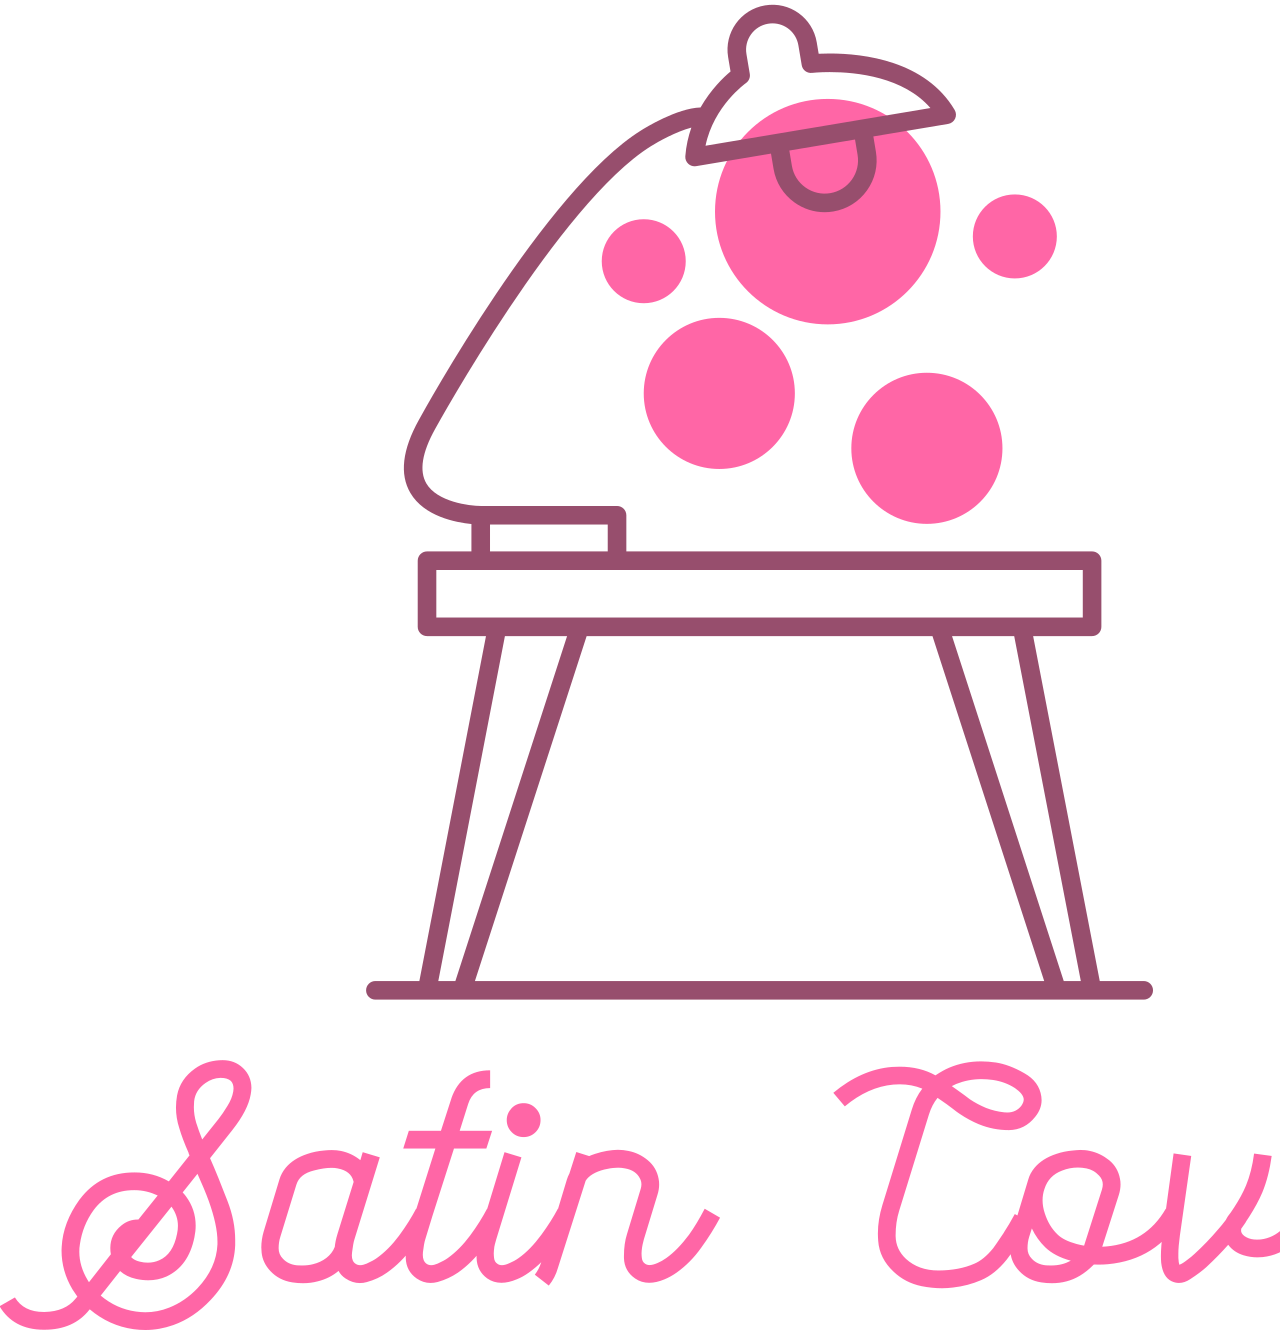 Satin Cove's logo